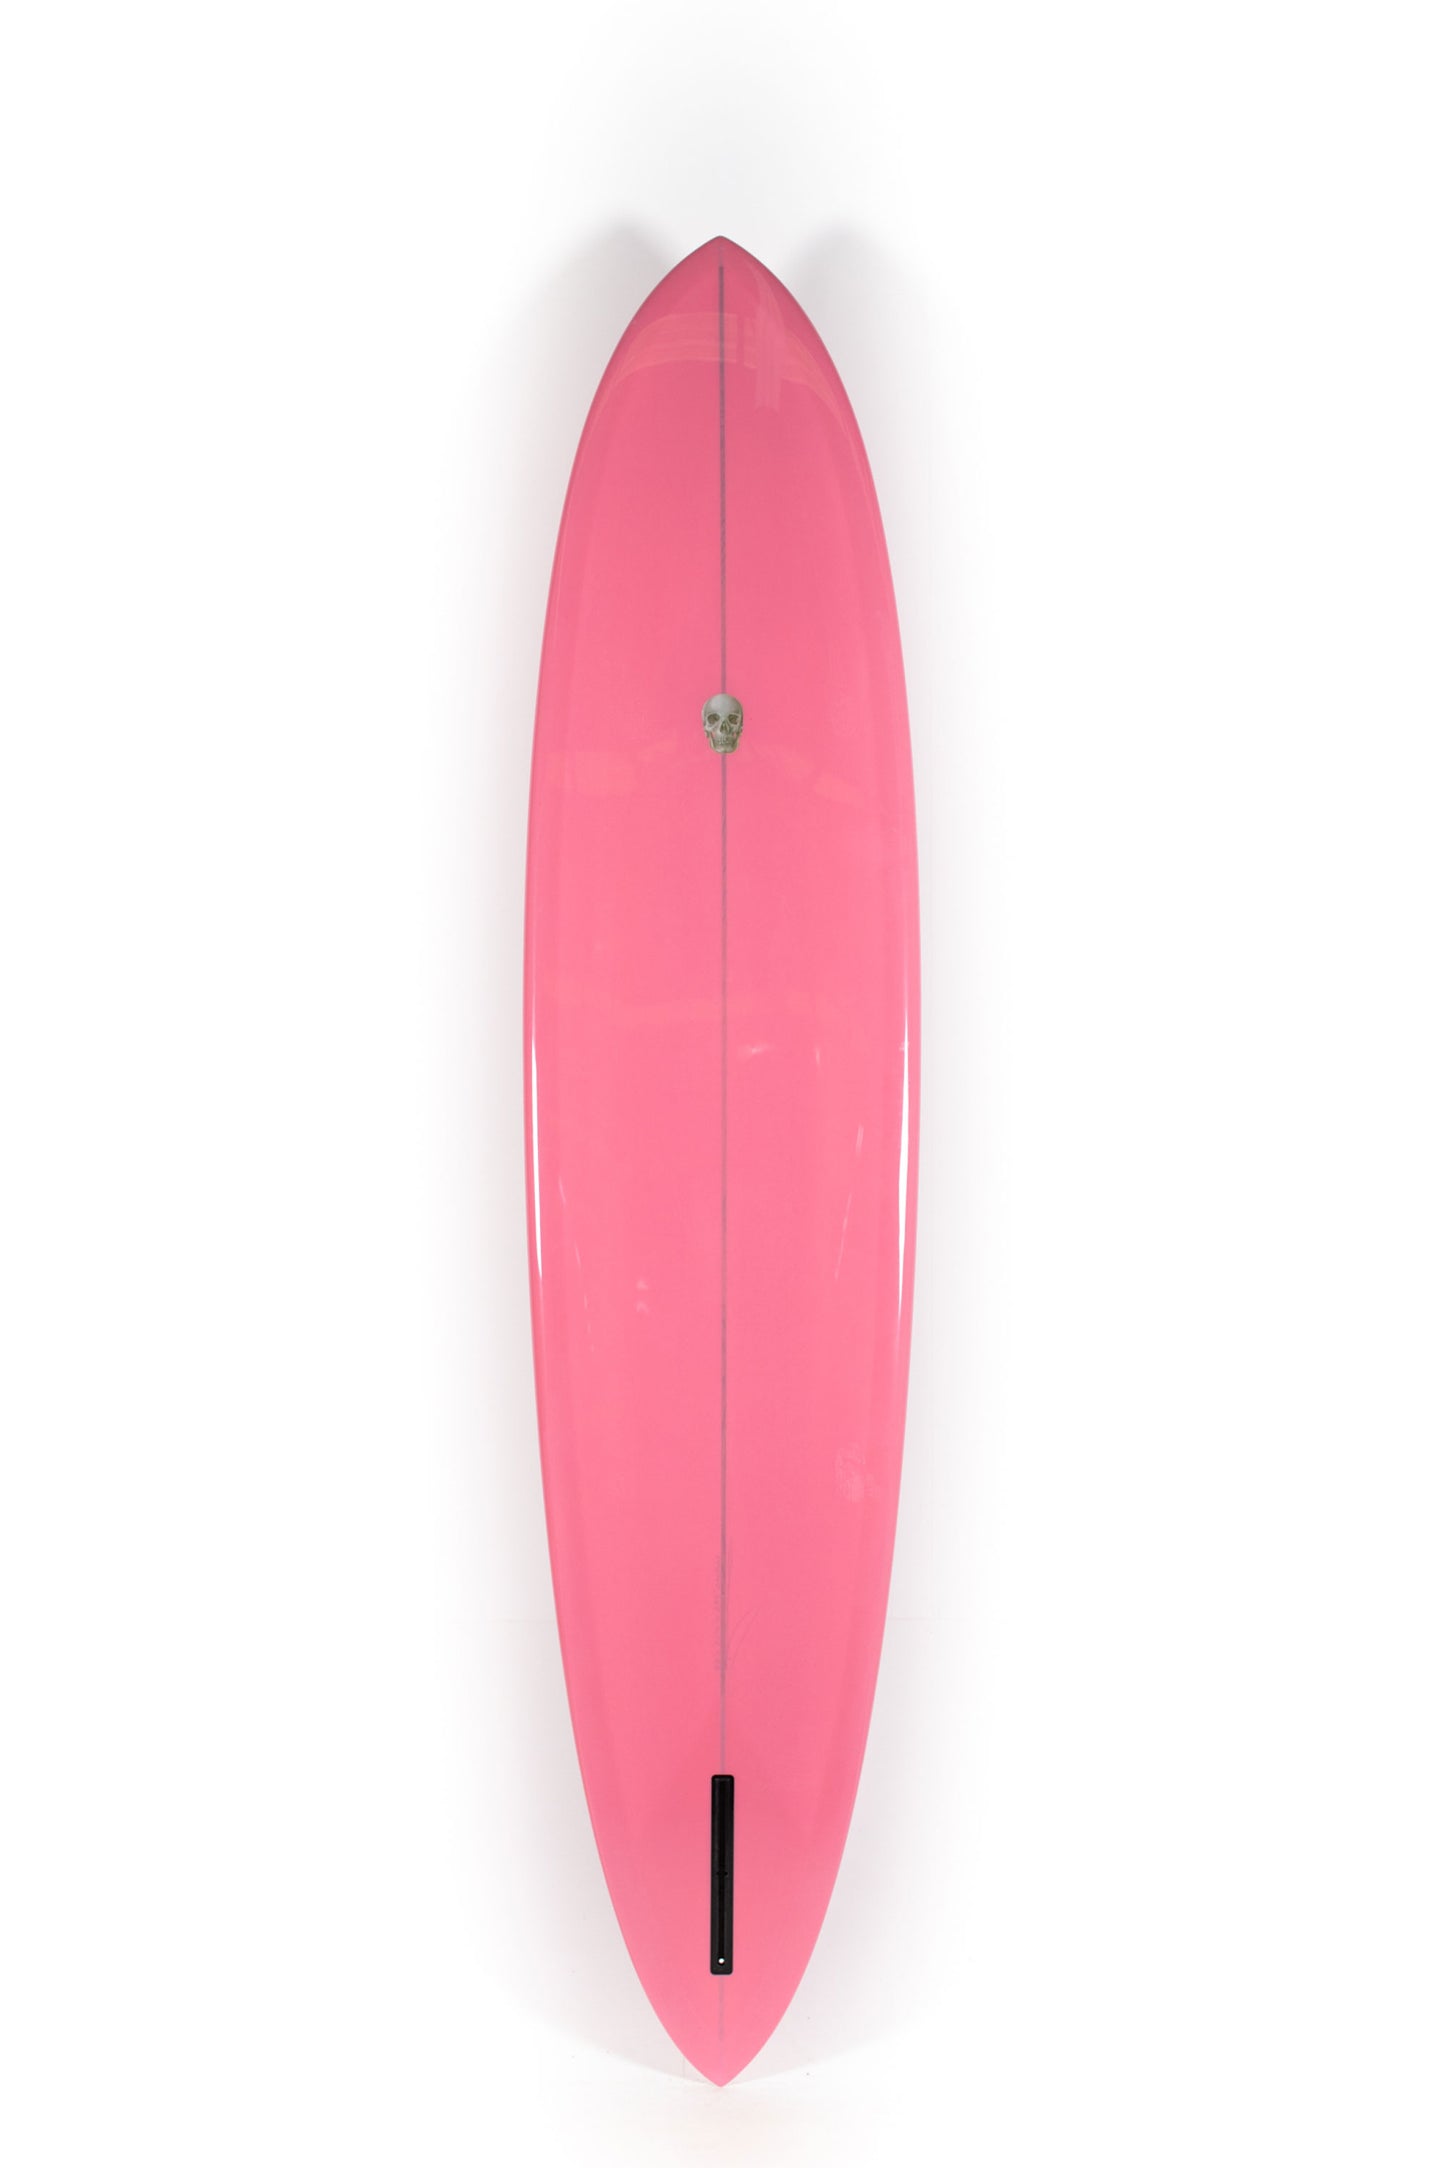 Pukas Surf Shop - Christenson Surfboards - C-BUCKET - 8'6" x 21 1/2 x 2 7/8 - CX05024